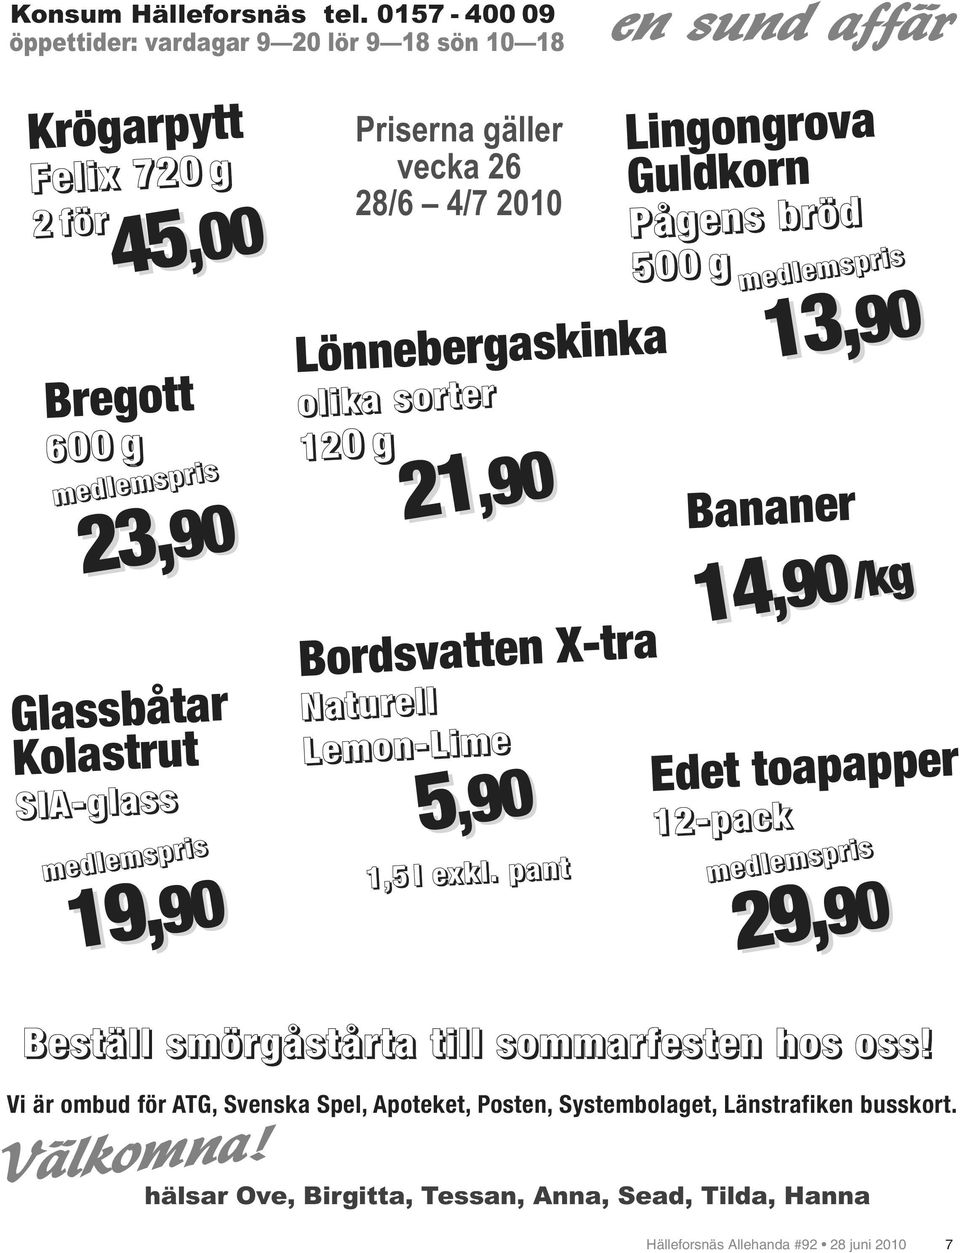 Priserna gäller vecka 26 28/6 4/7 2010 Lönnebergaskinka olika sorter 120 g 21 21,90 Bordsvatten X-tra Naturell Lemon-Lime 5,90 1,5 l exkl.